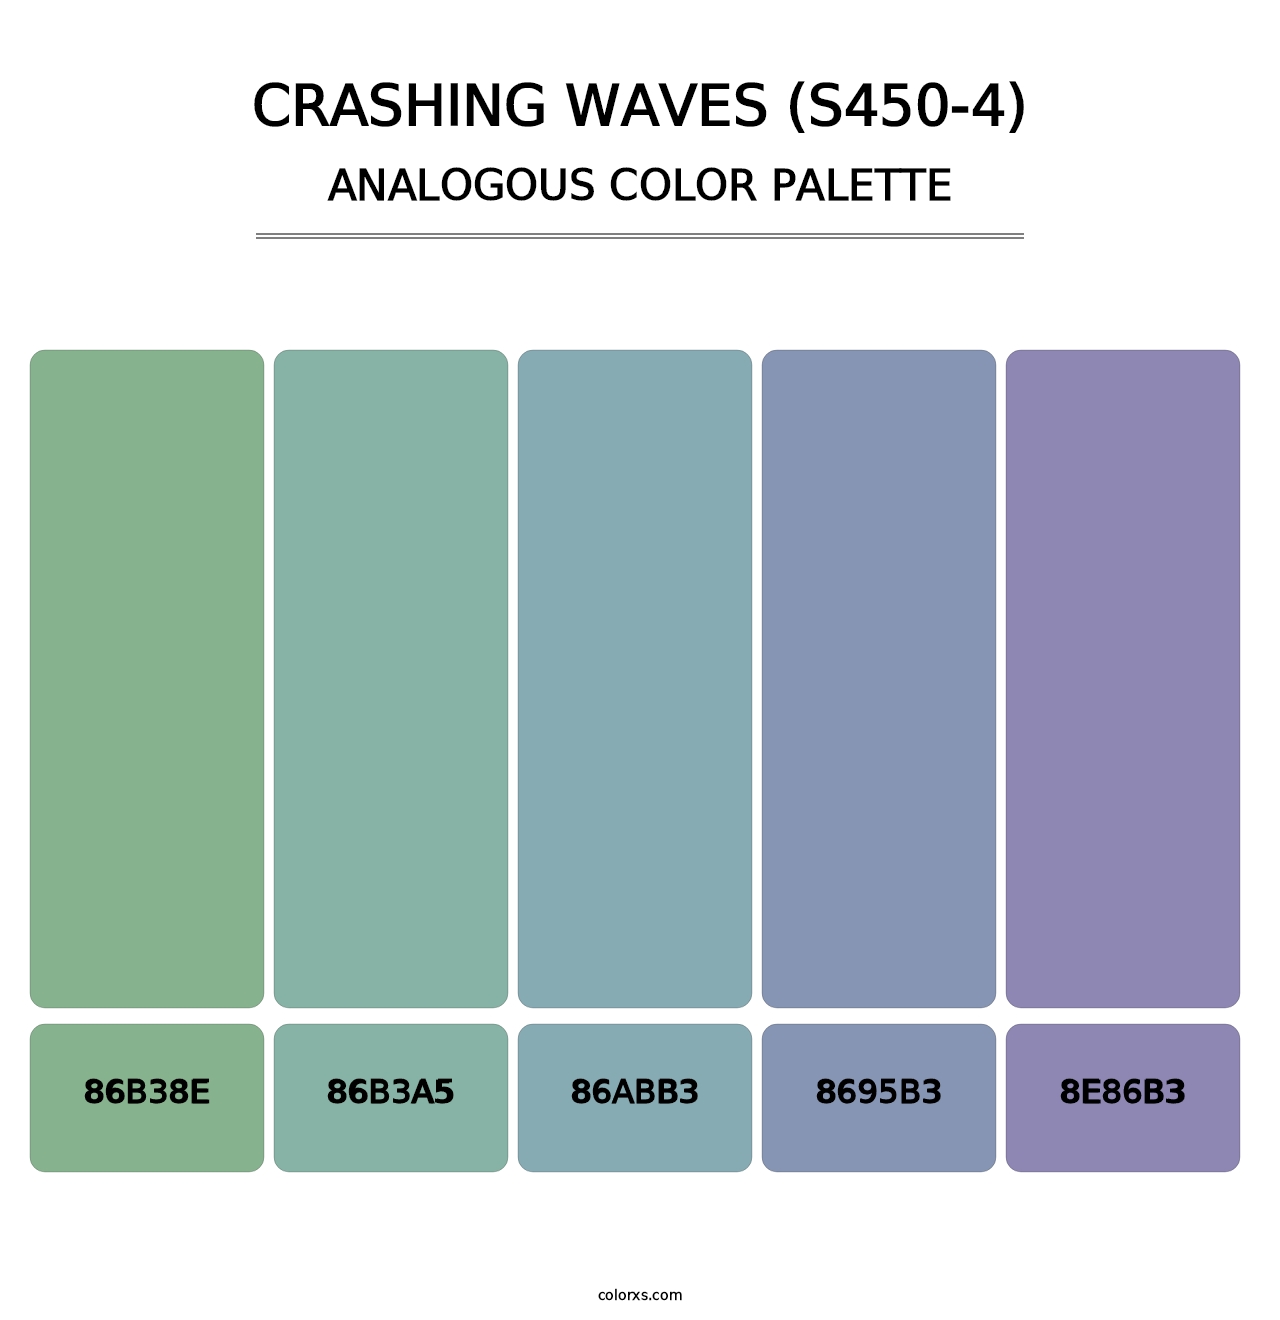 Crashing Waves (S450-4) - Analogous Color Palette